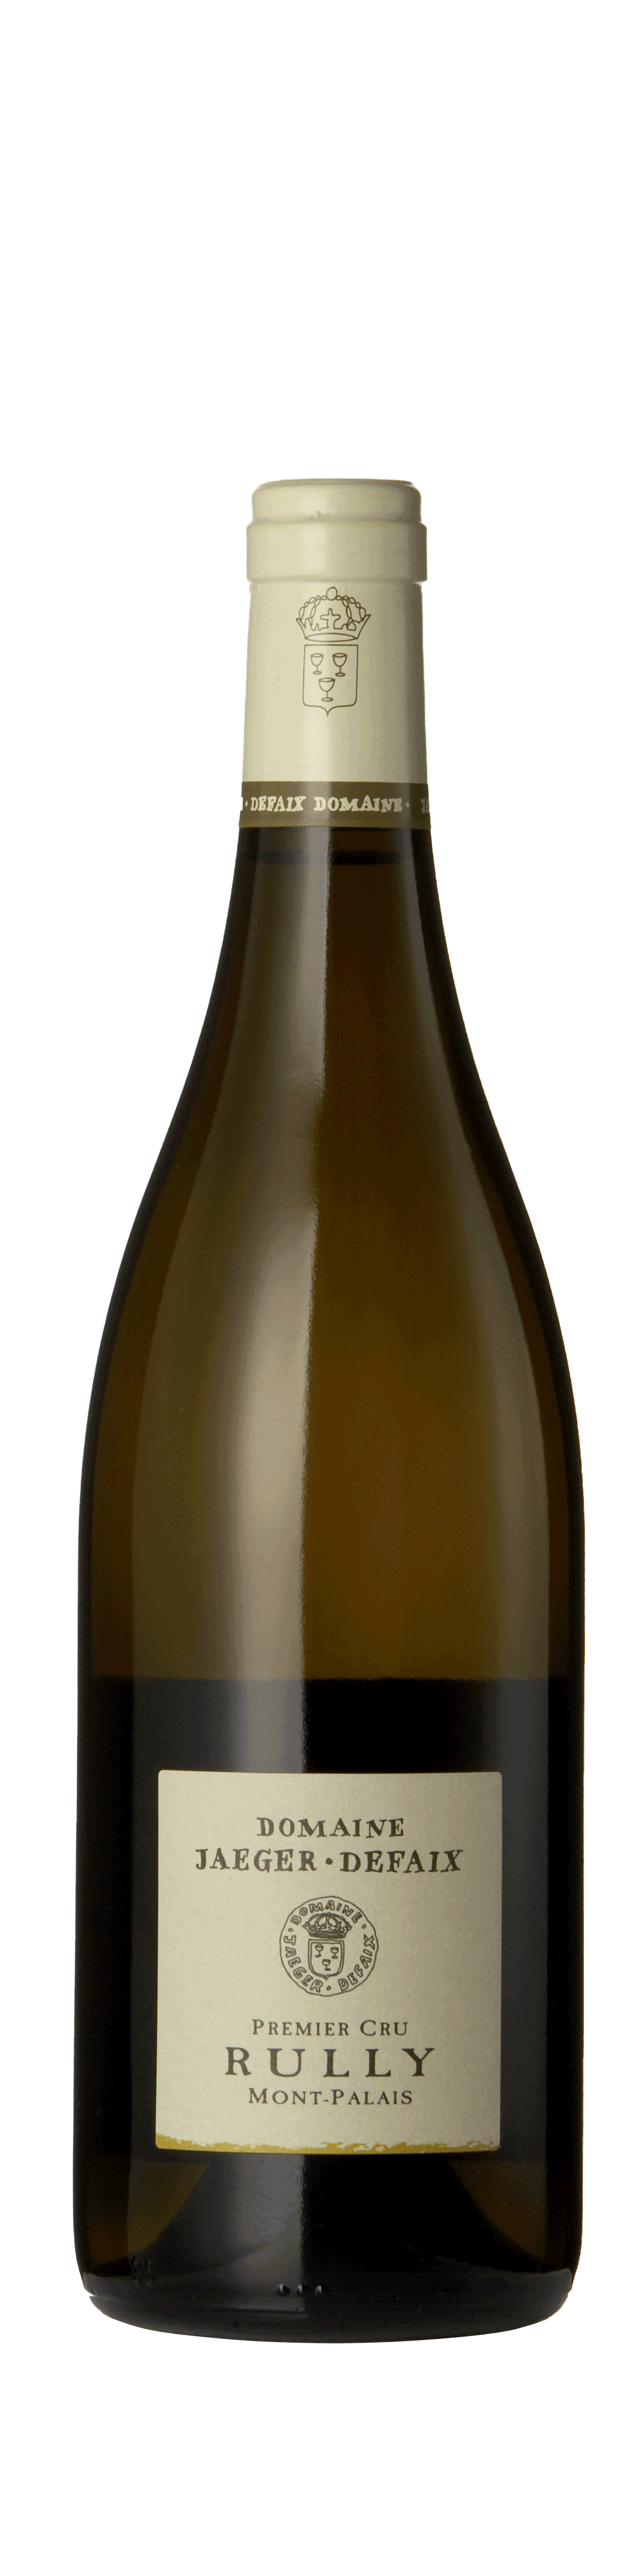 Bottle shot - Domaine Jaeger-Defaix, Rully 1er Cru Blanc, Mont-Palais, Burgundy, France